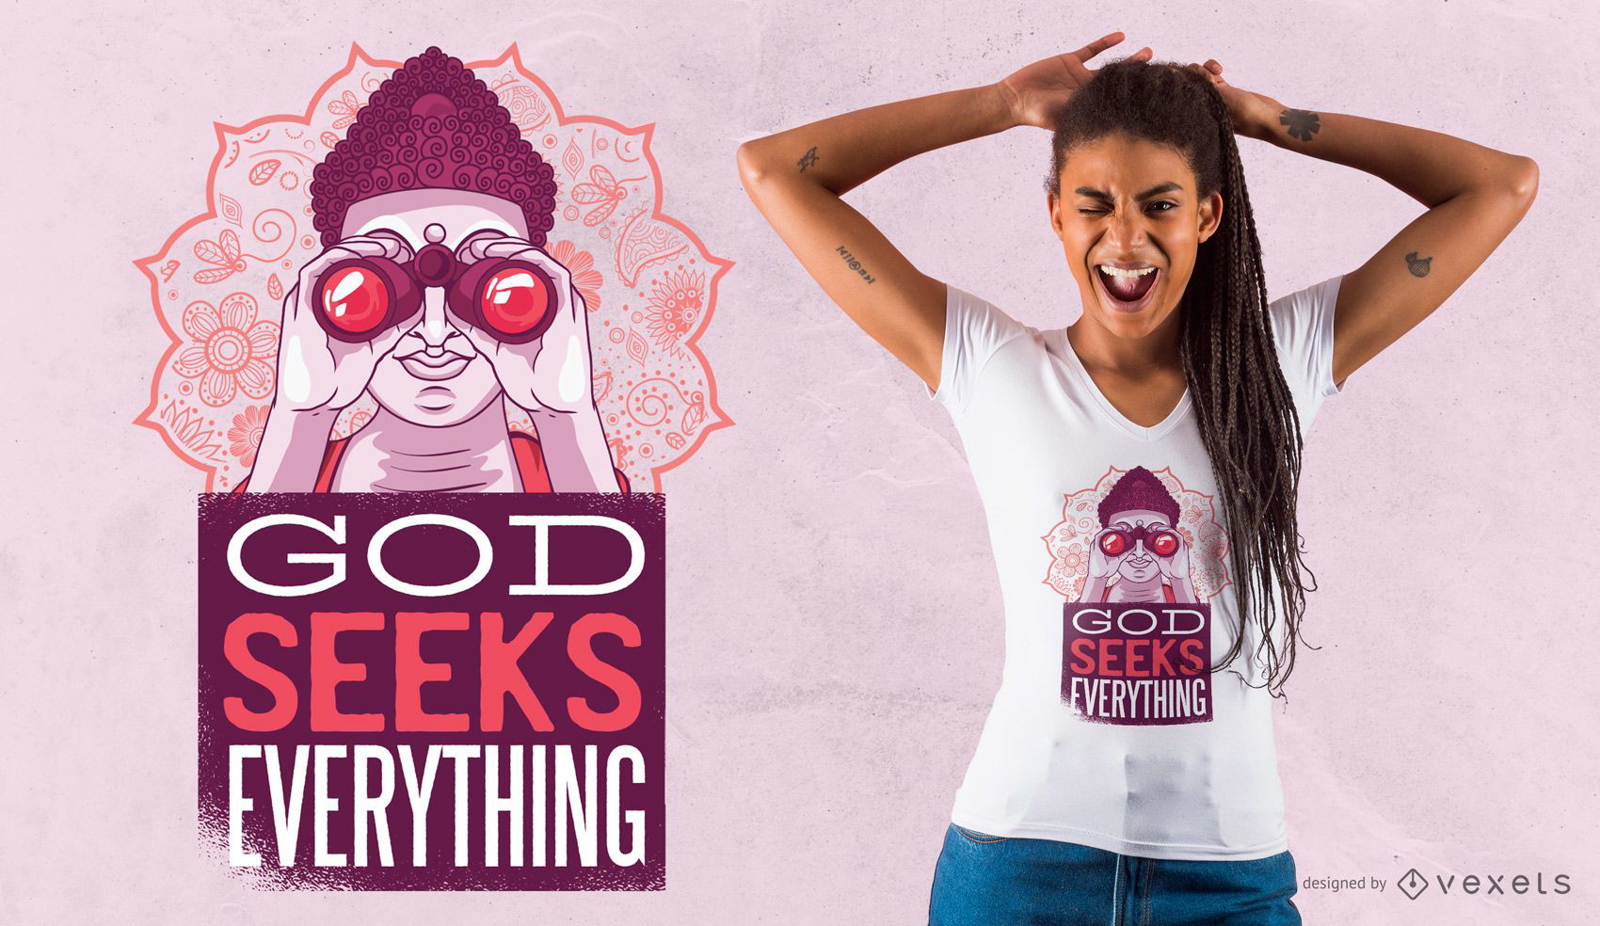 God seeks everything t-shirt design